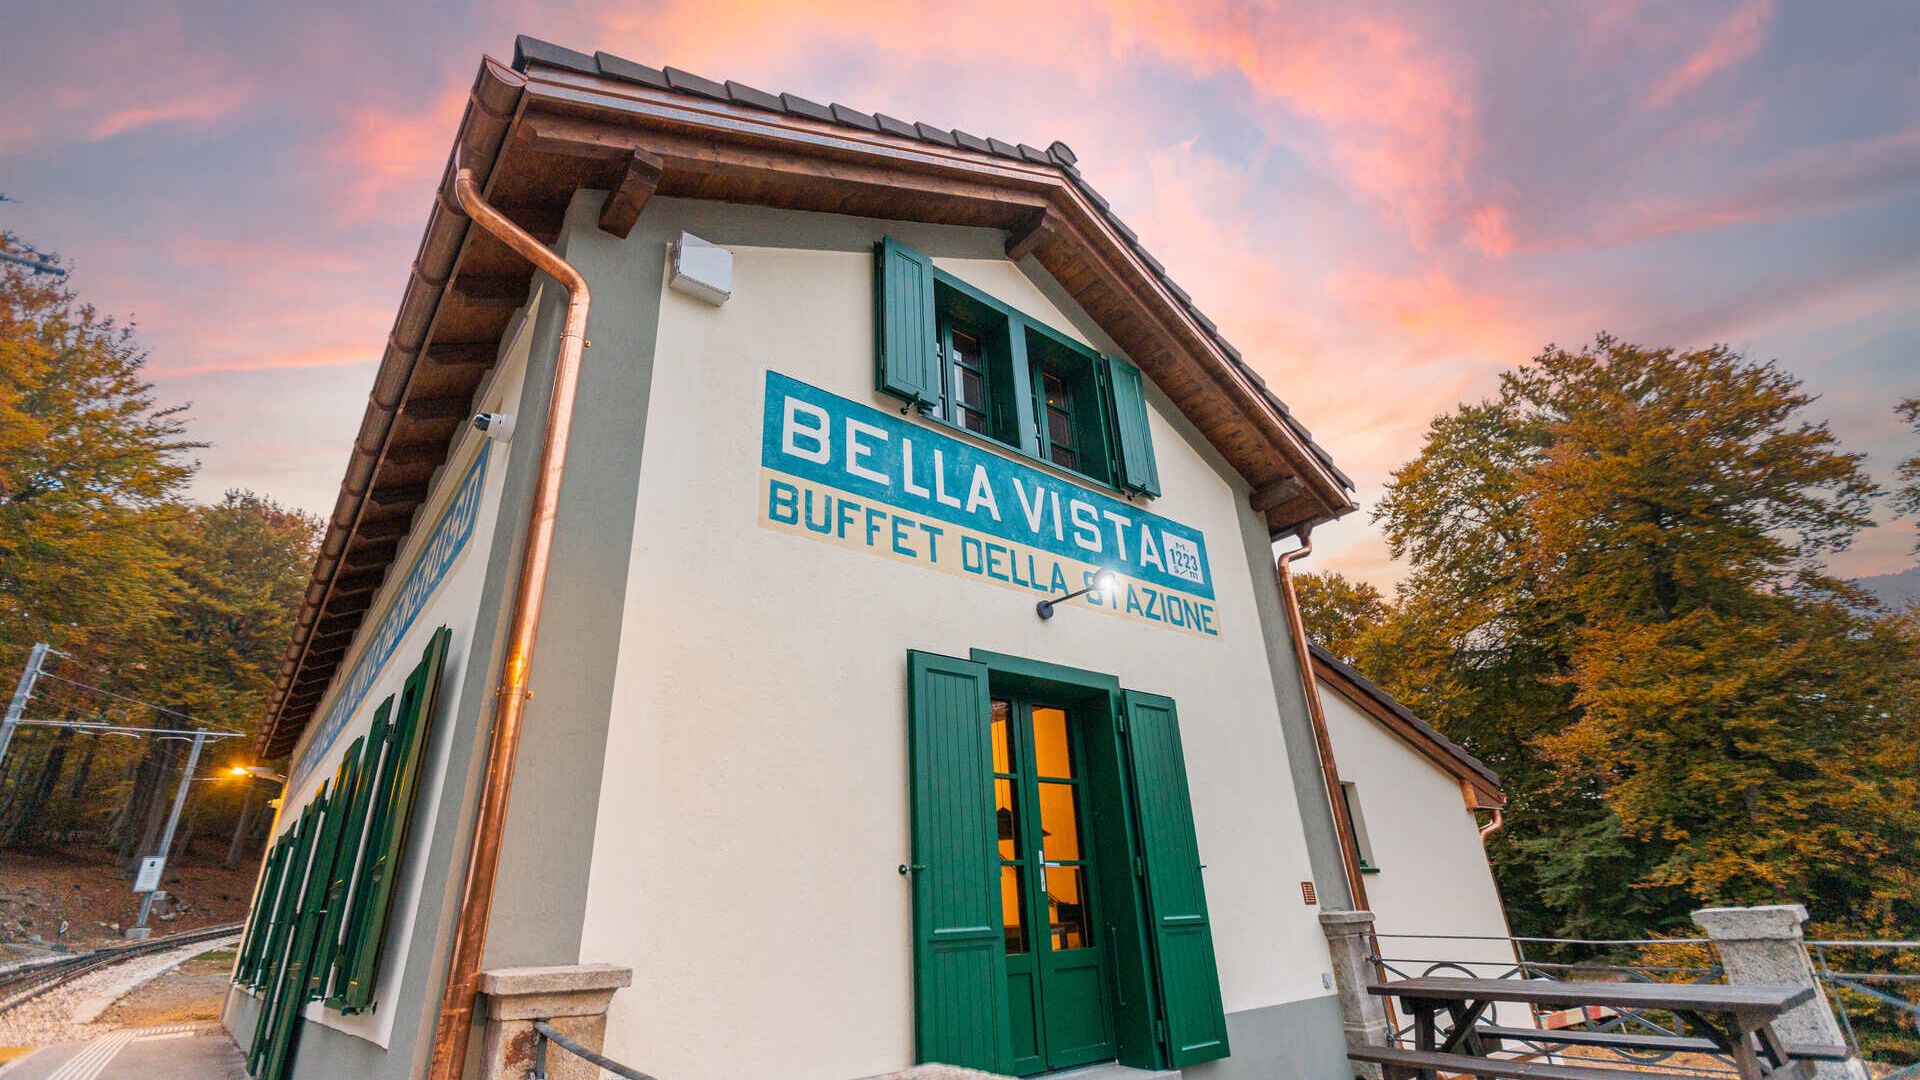 Monte Generoso: Bellavista Buffet på 1223 meter over havet